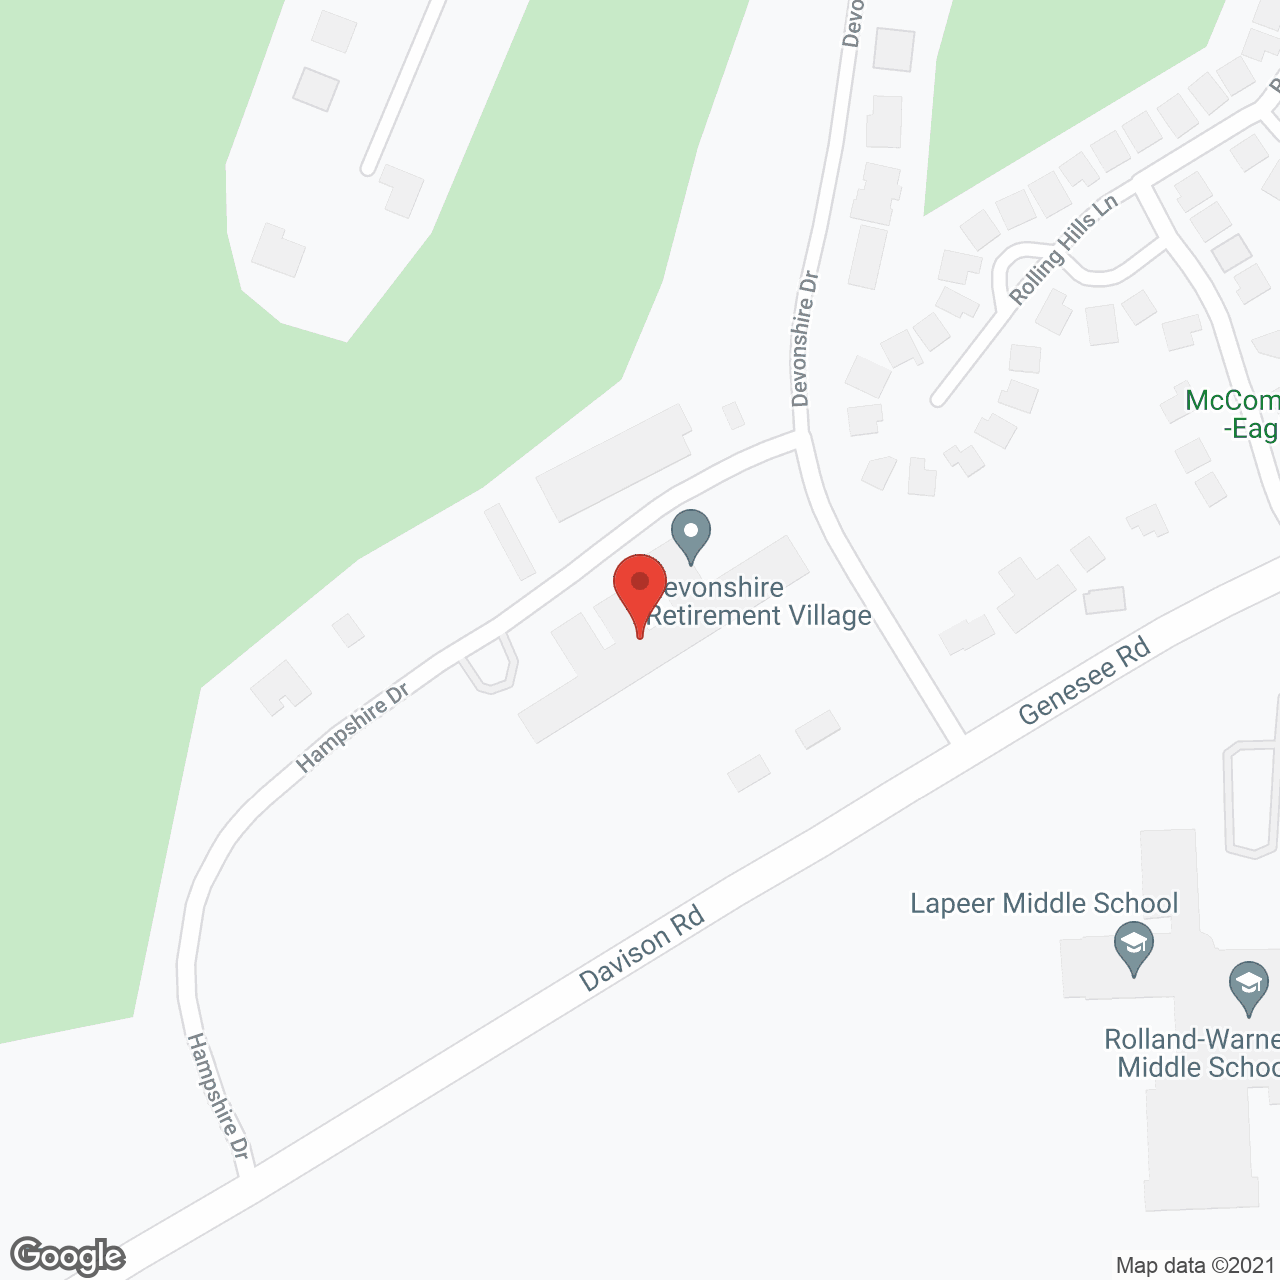 Devonshire Retirement Village in google map